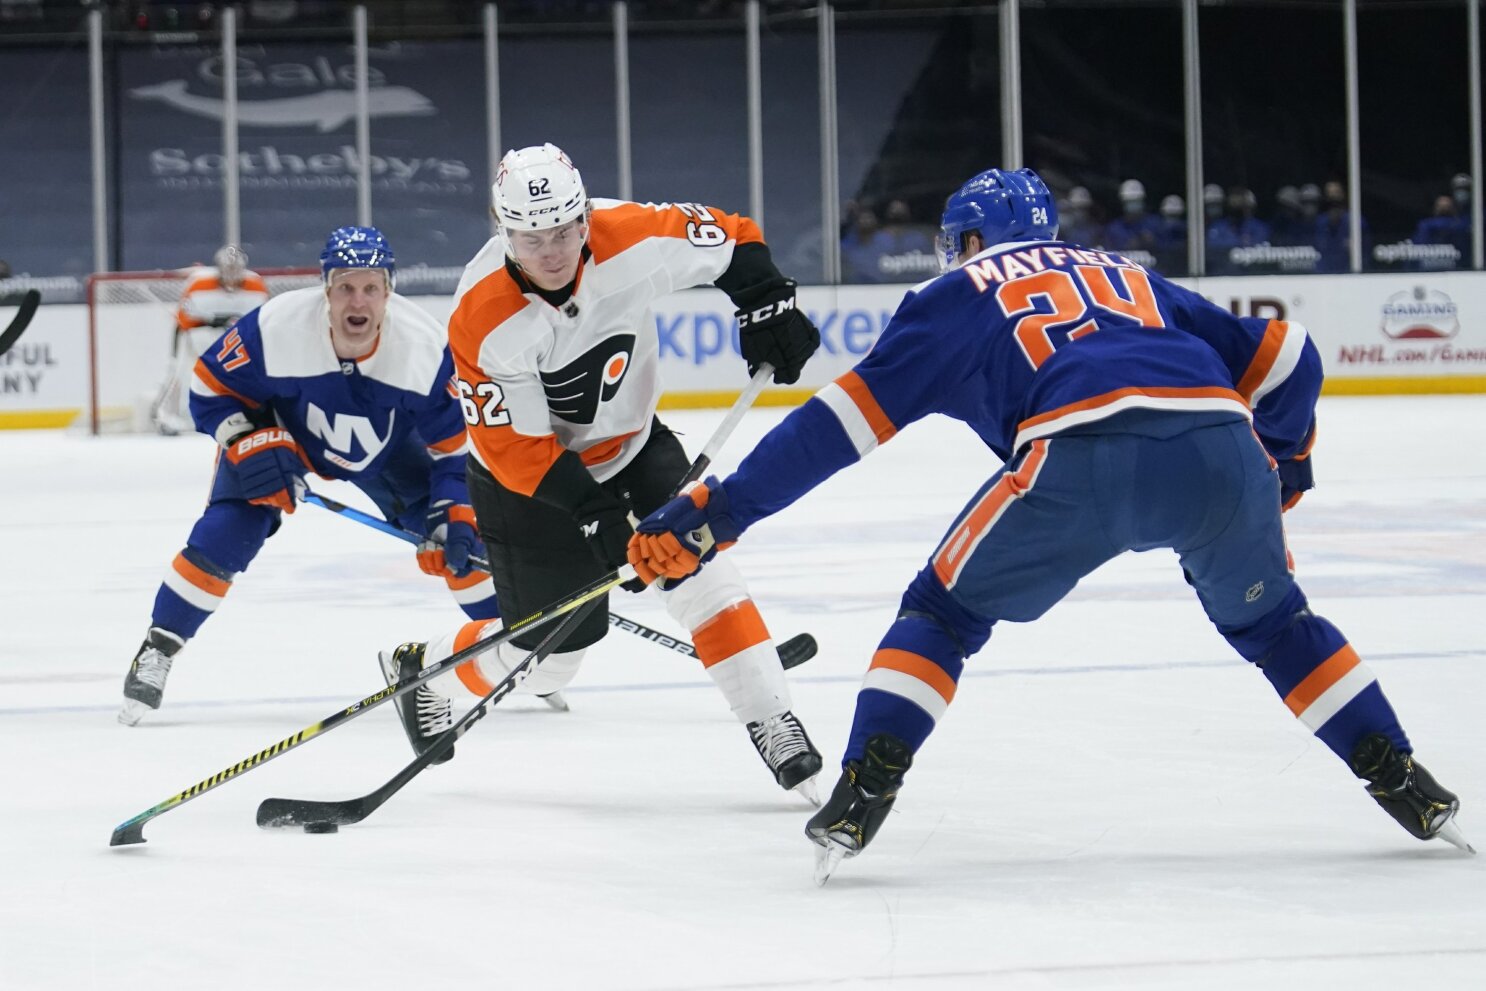 Philadelphia Flyers lose to New York Rangers 3-2 in shootout